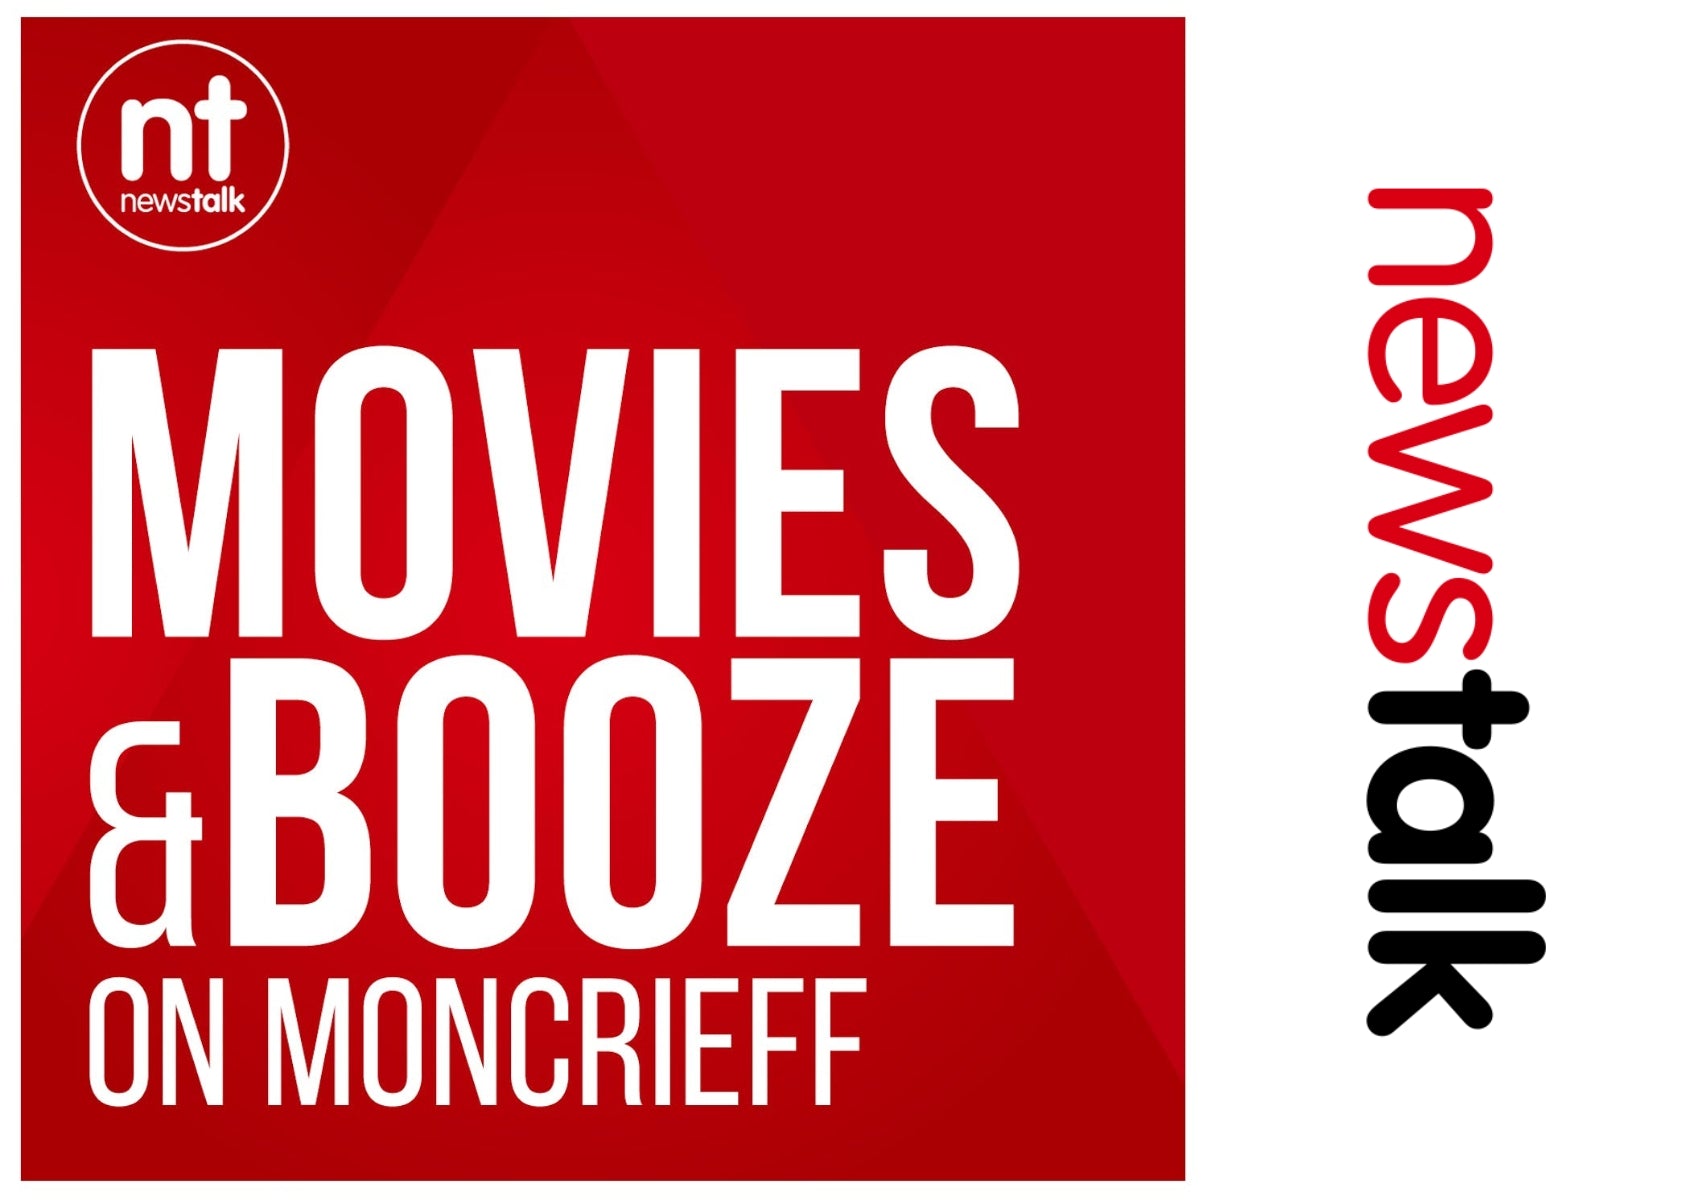 Movies & Booze on Moncrieff - Monsieur de Cambon